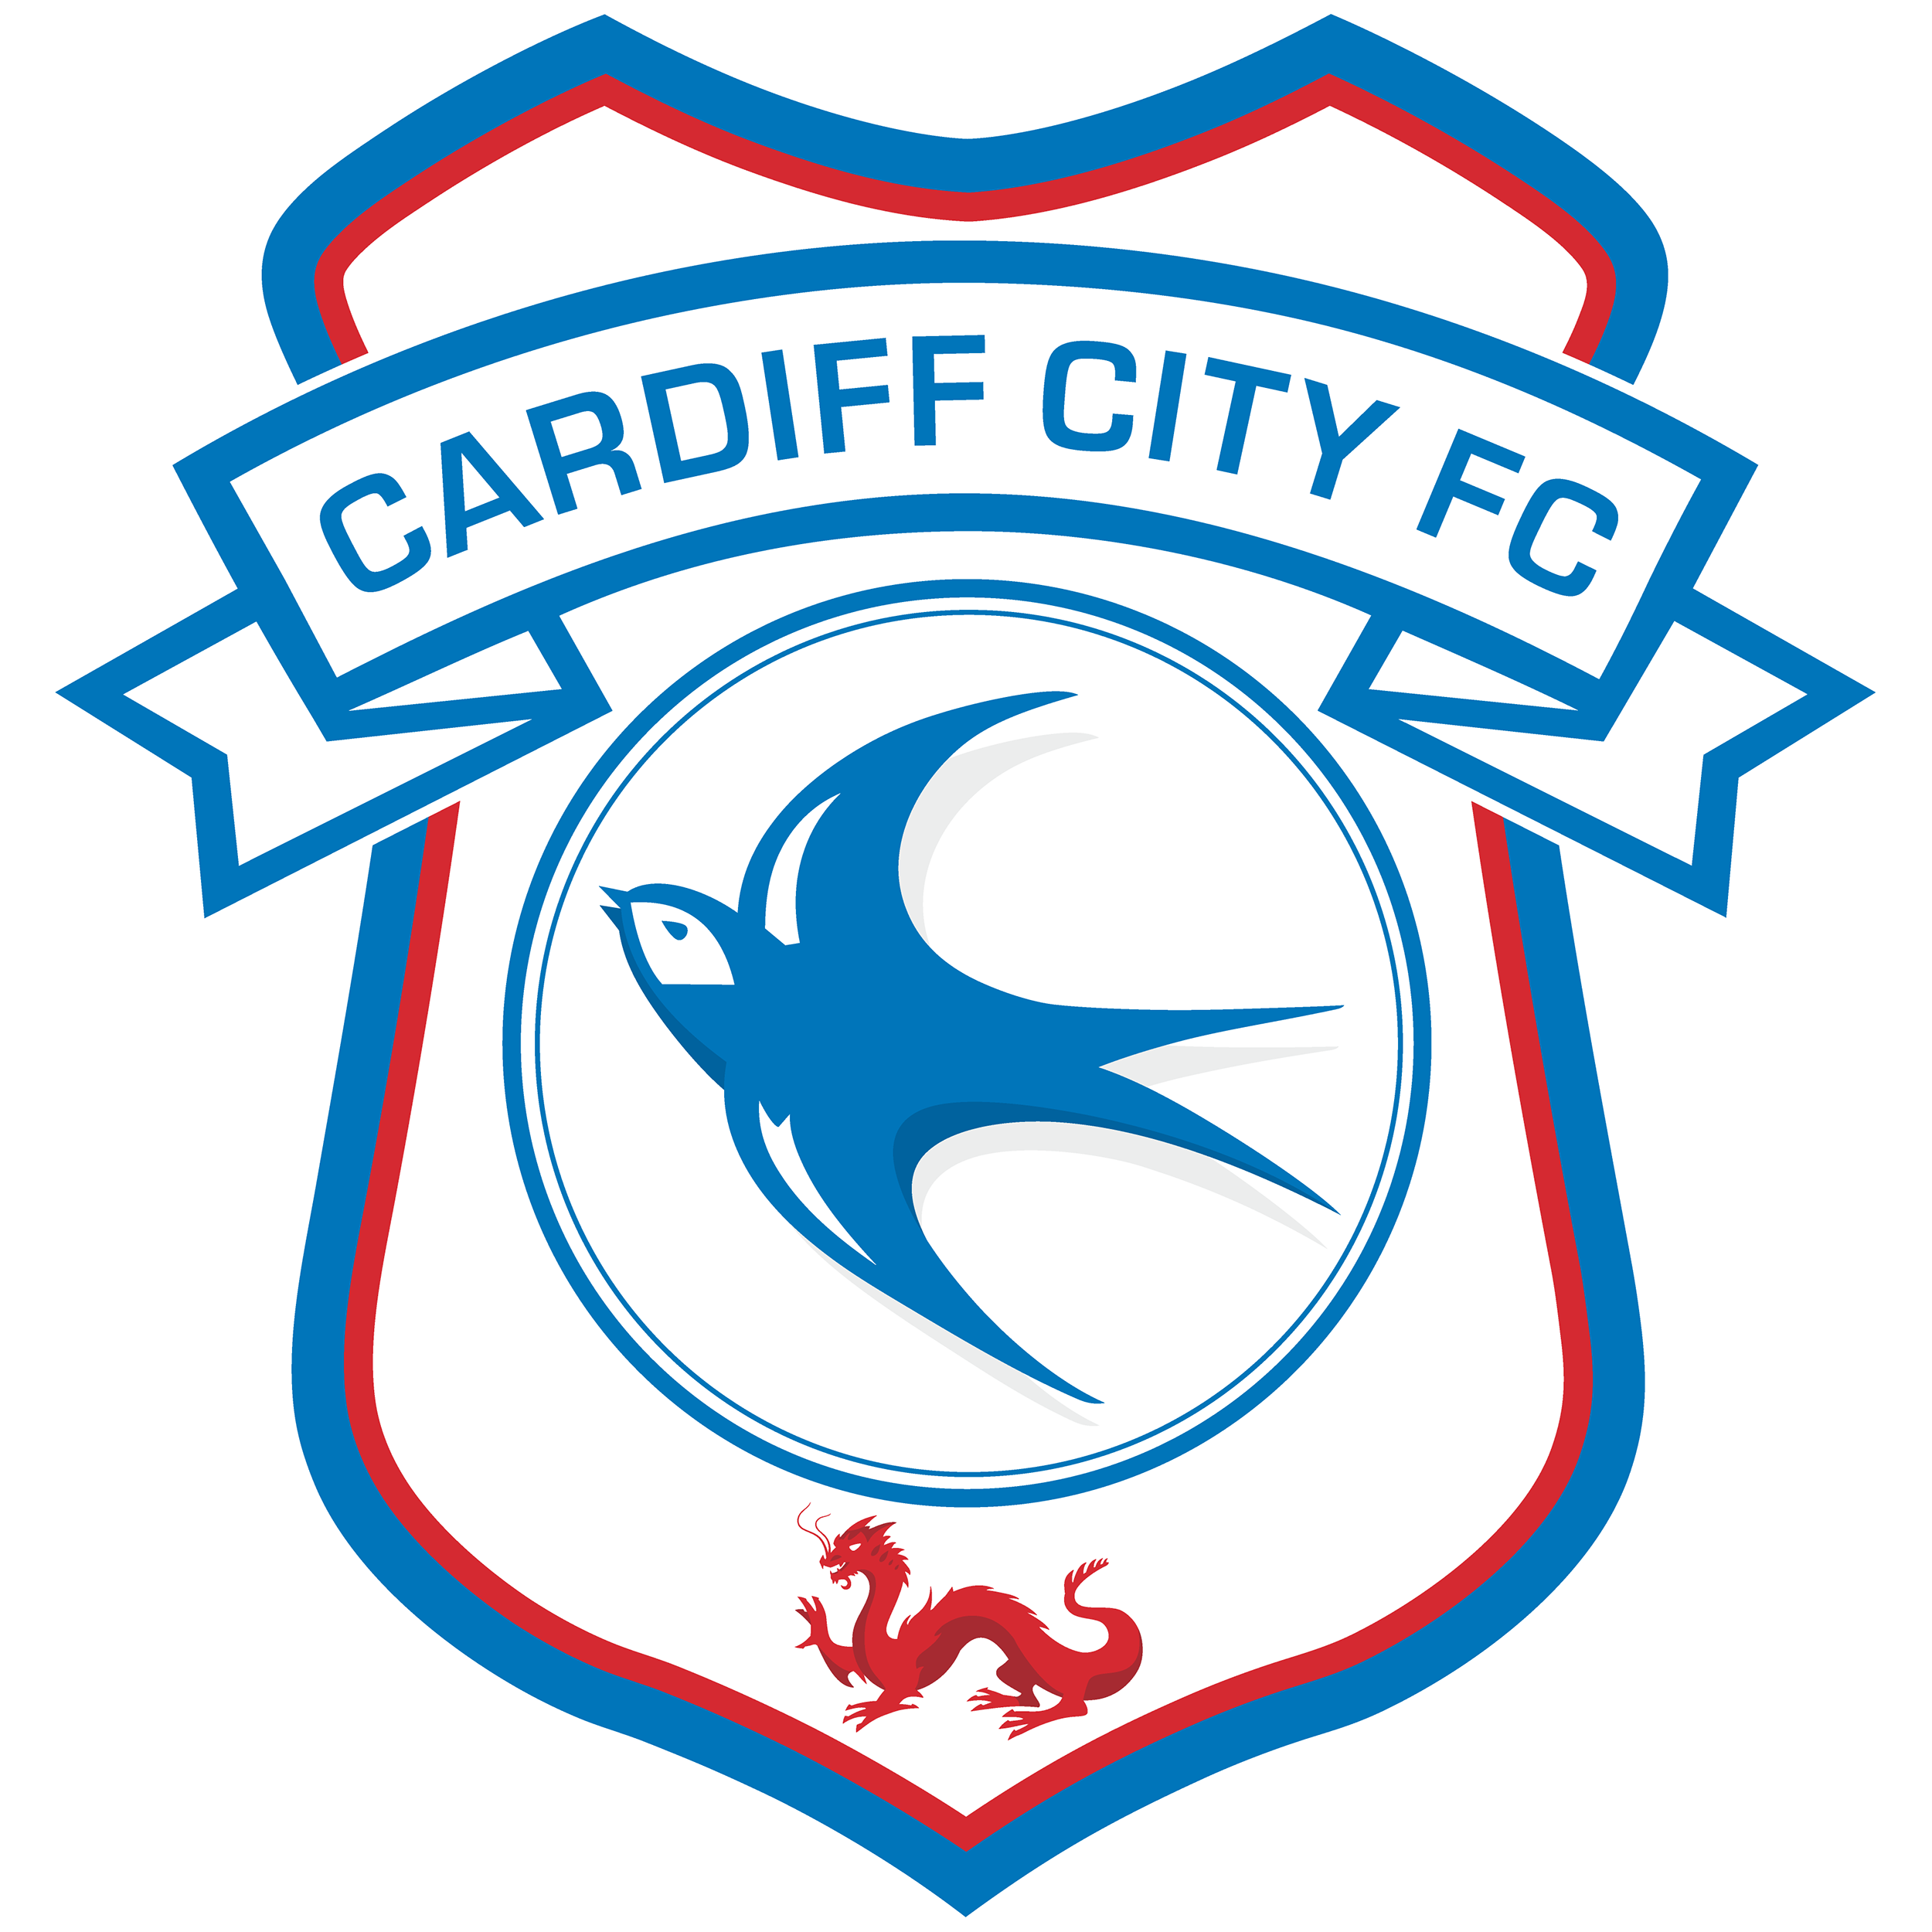 Cardiff City F C logo imagen Transparente